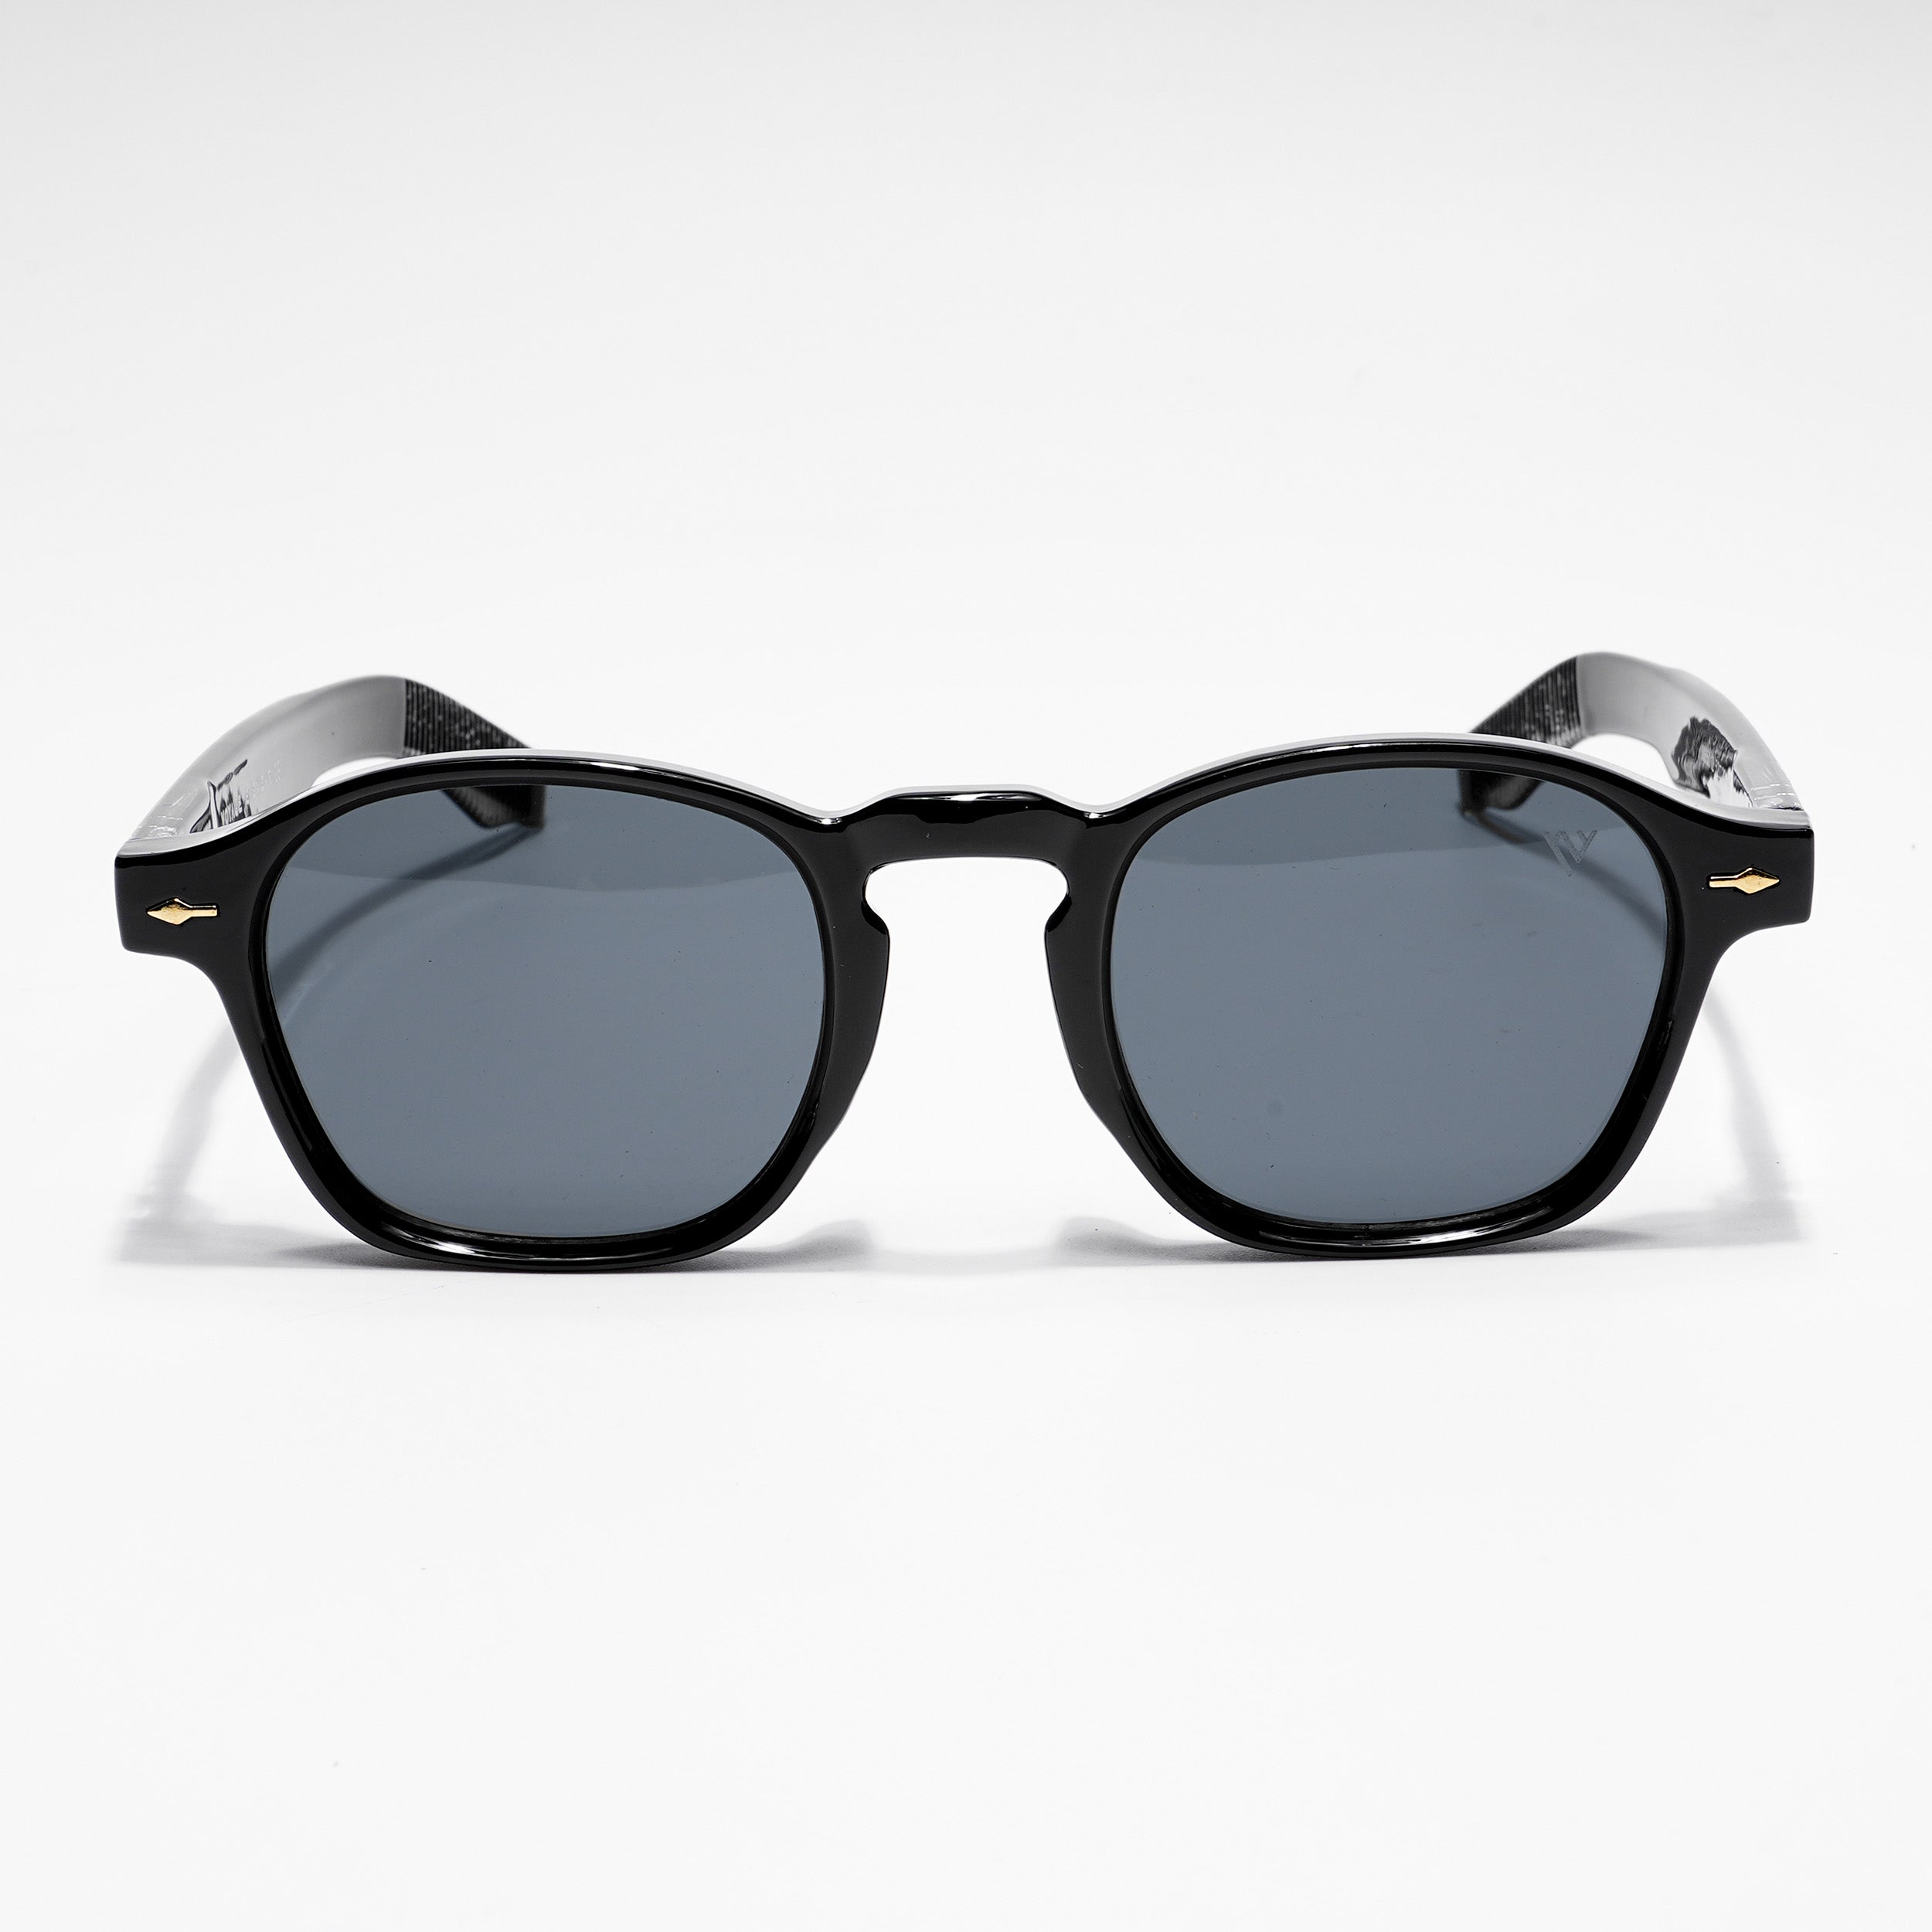 Voyage Black Round Sunglasses - MG3808